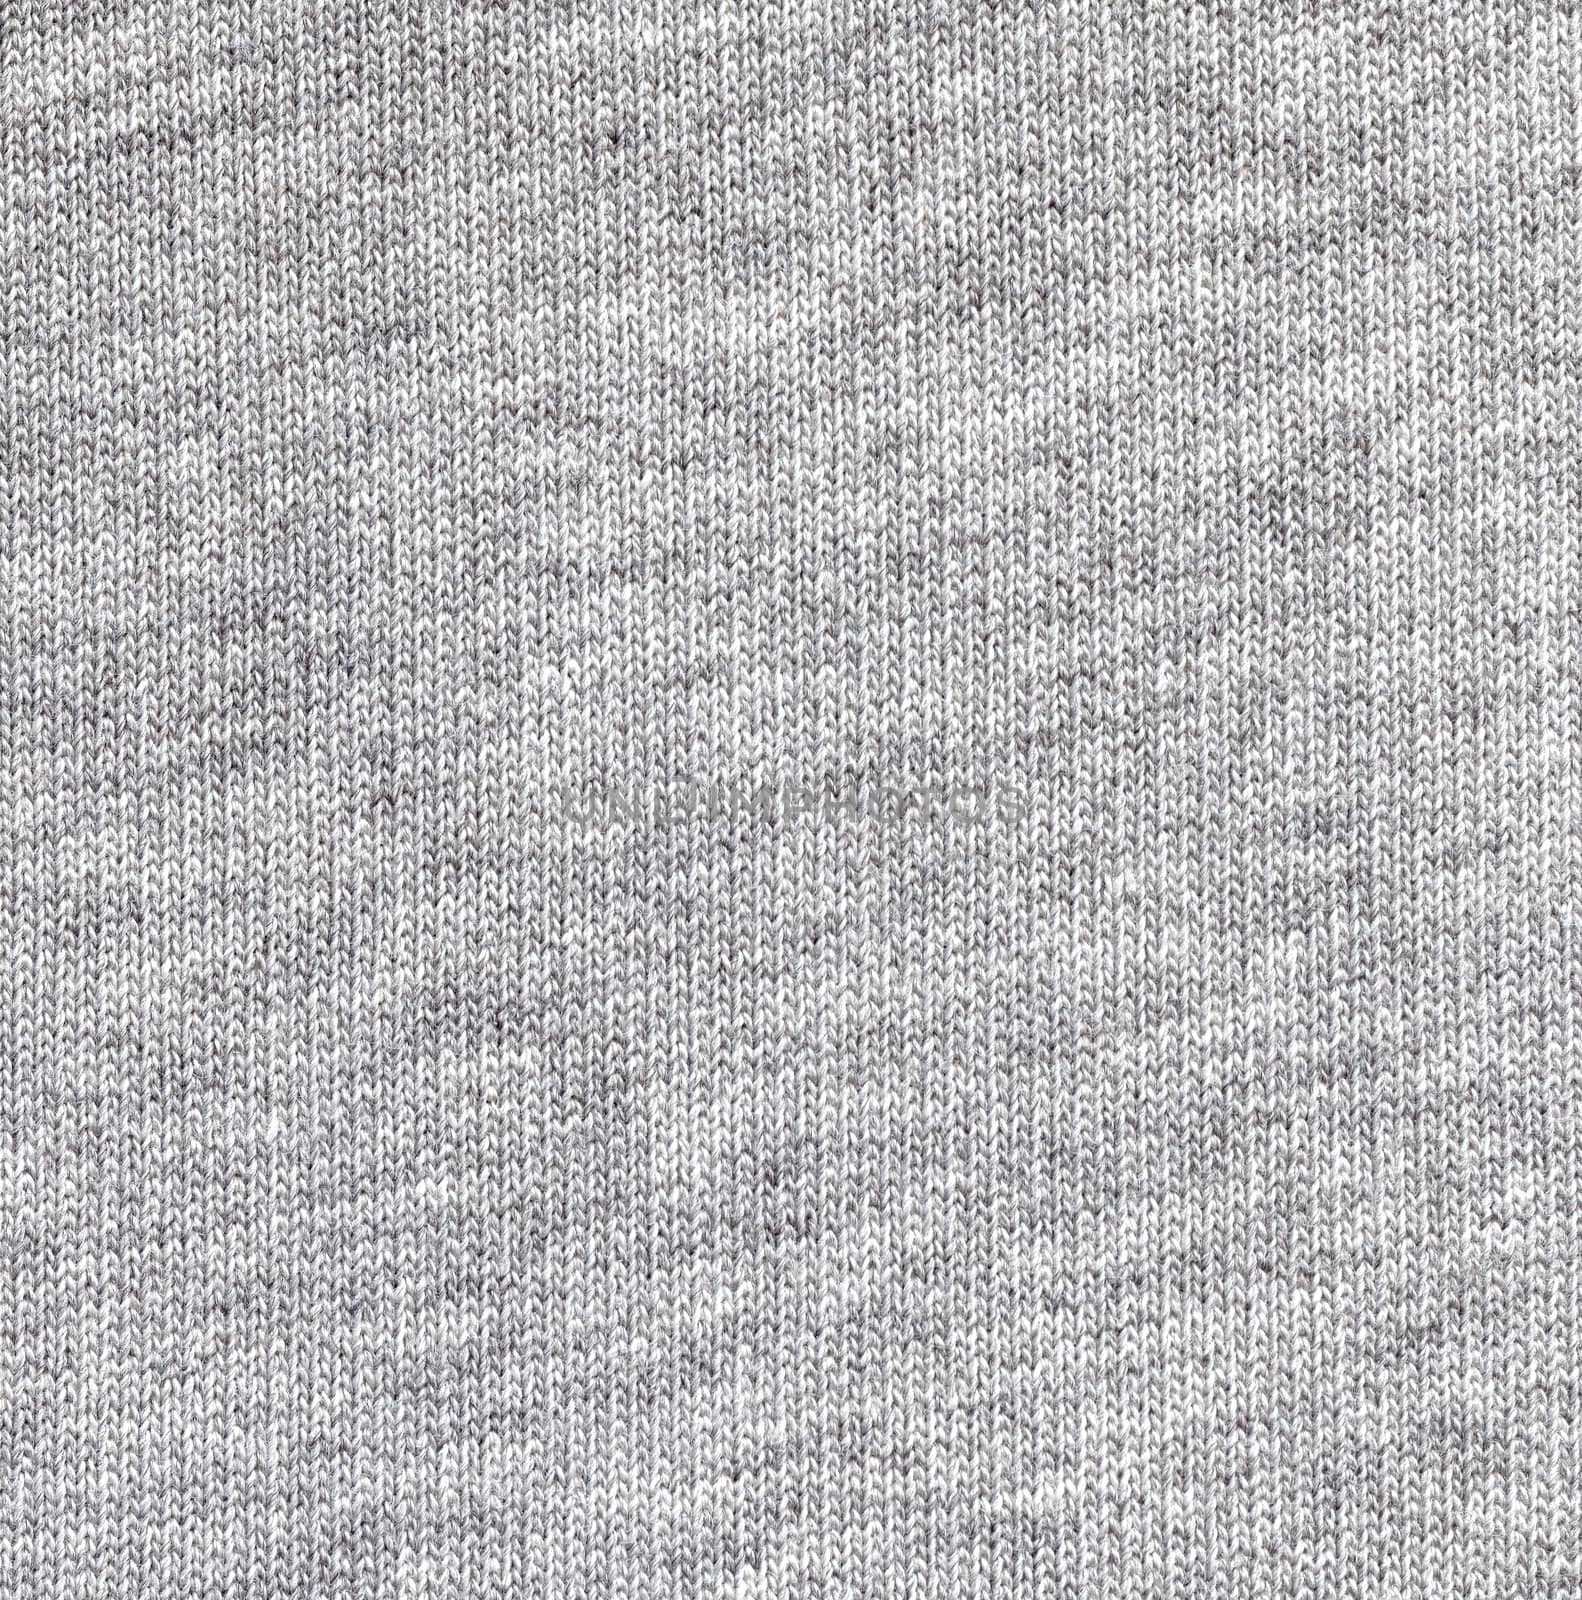 Fabric texture. Melange light gray color background.